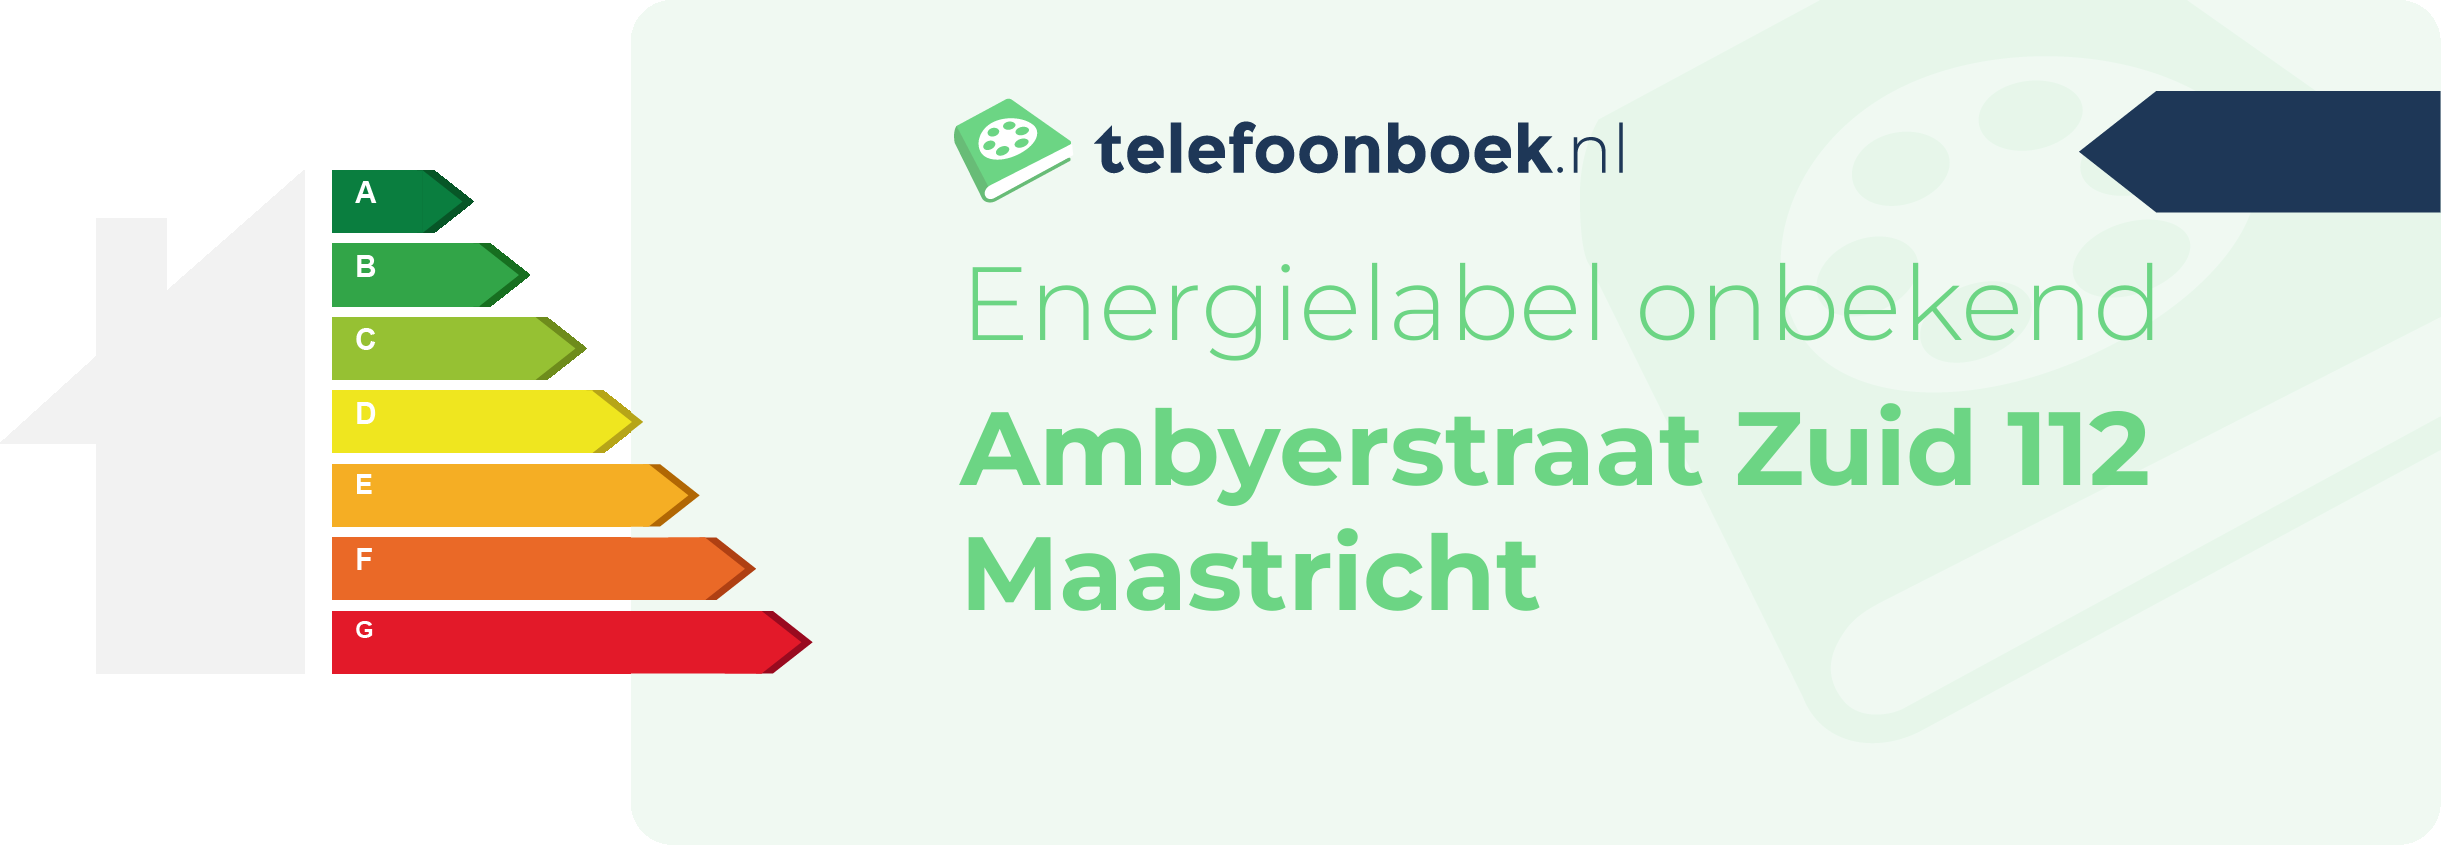 Energielabel Ambyerstraat Zuid 112 Maastricht